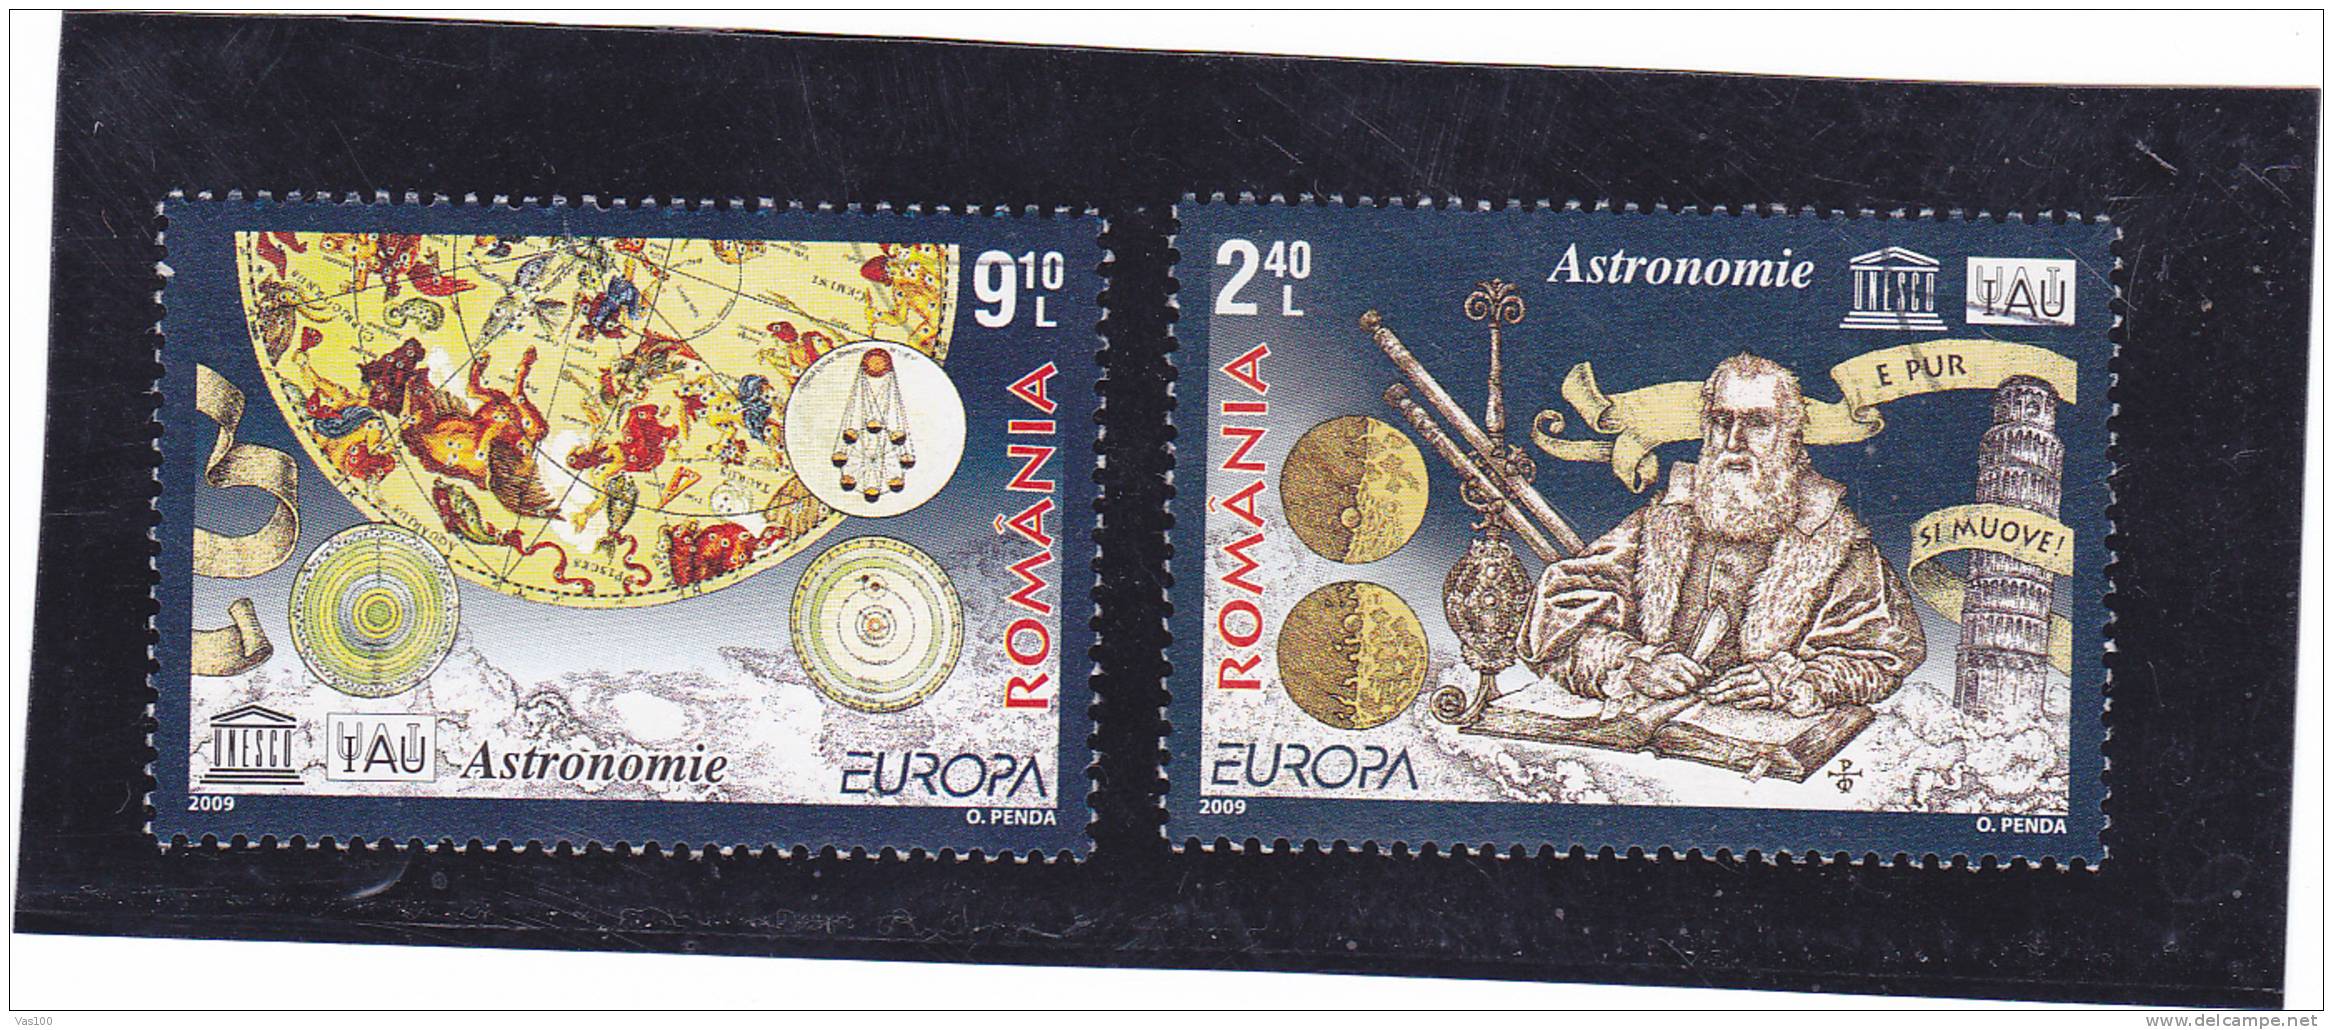 Romania 2009 Astronomy, EUROPA CEPT ,CTO,VFU. - Used Stamps